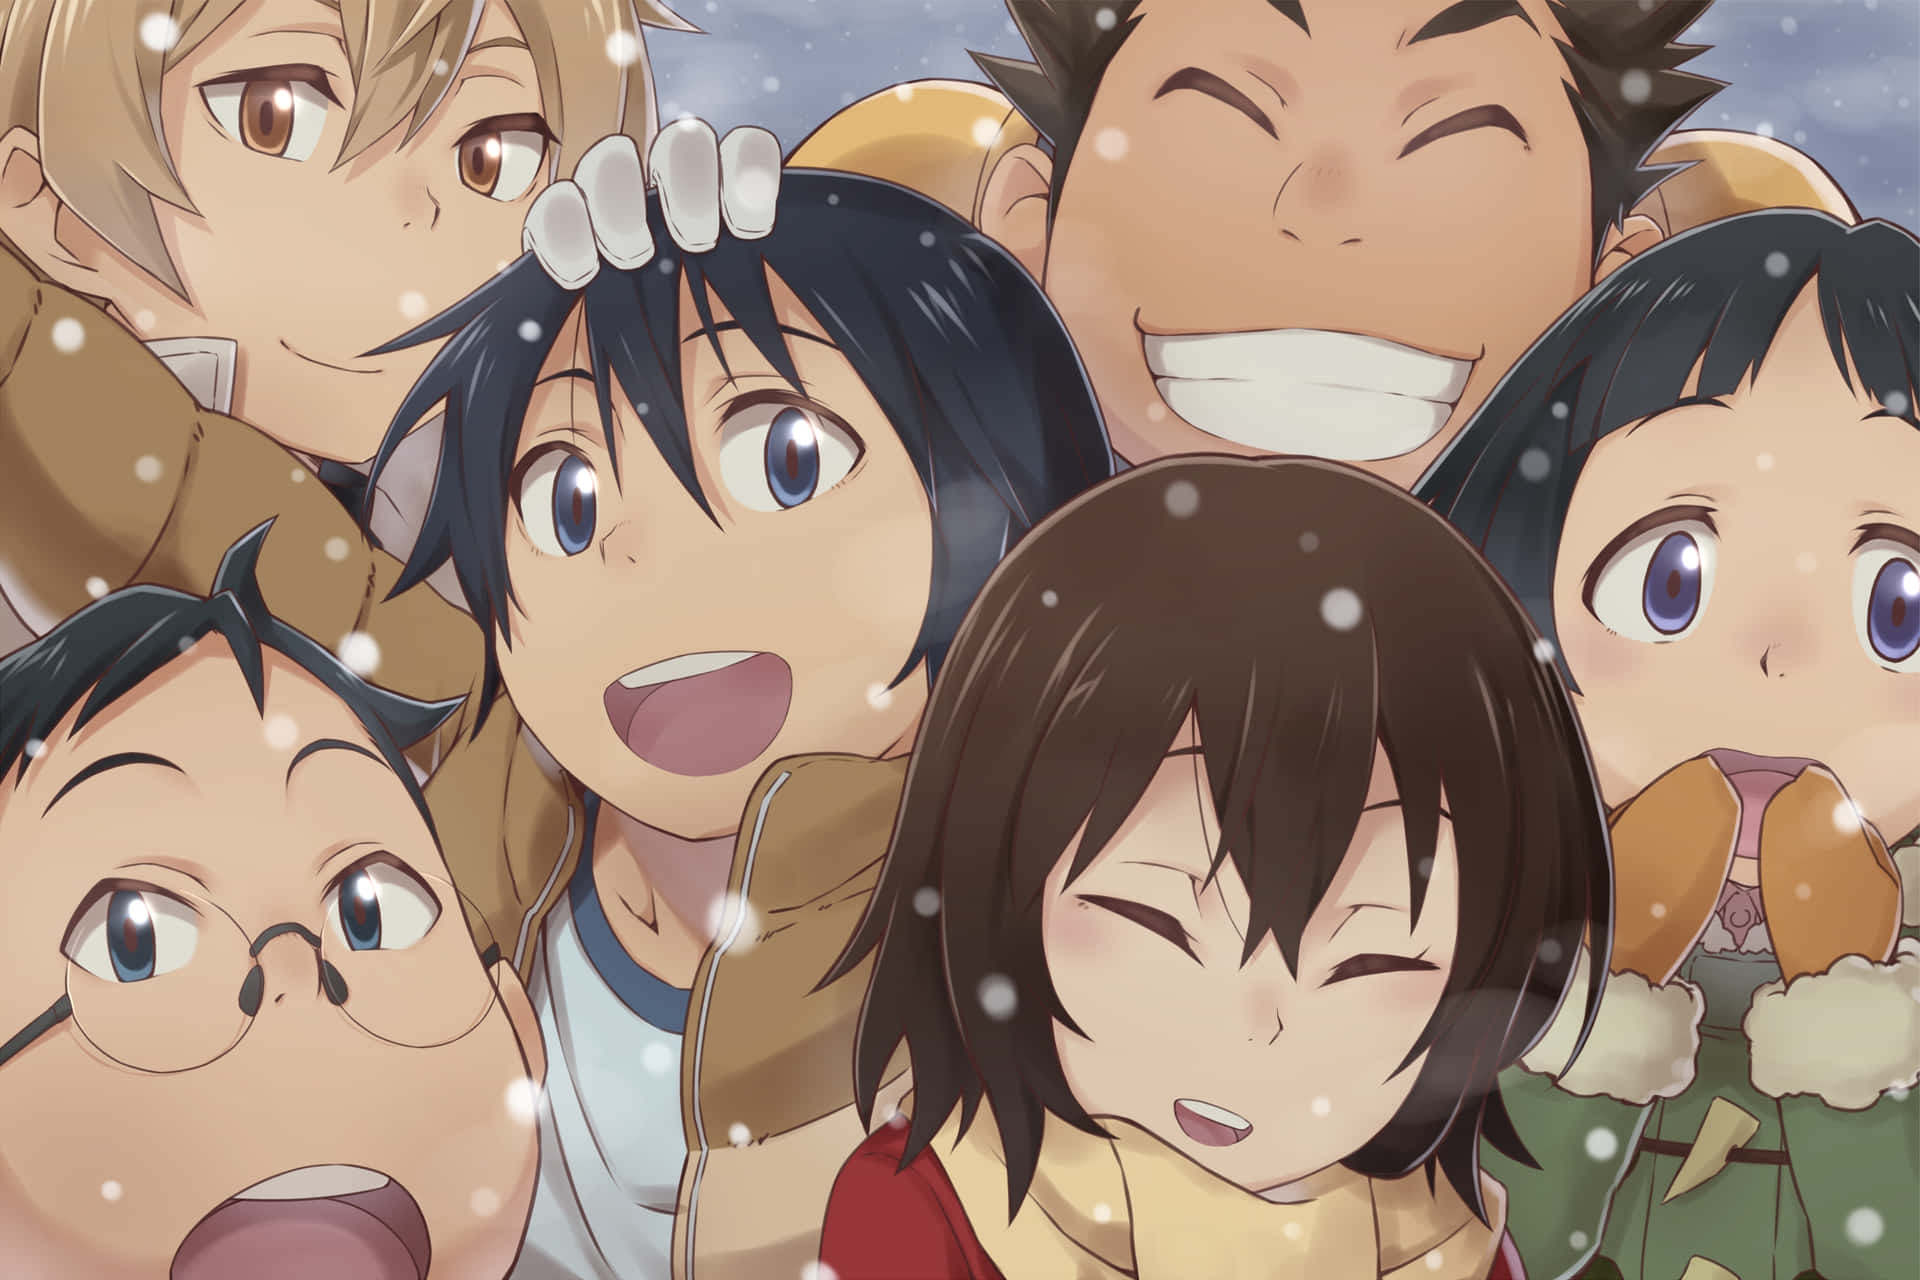 Ungrupo De Personajes De Anime Están Sonriendo En La Nieve. Fondo de pantalla